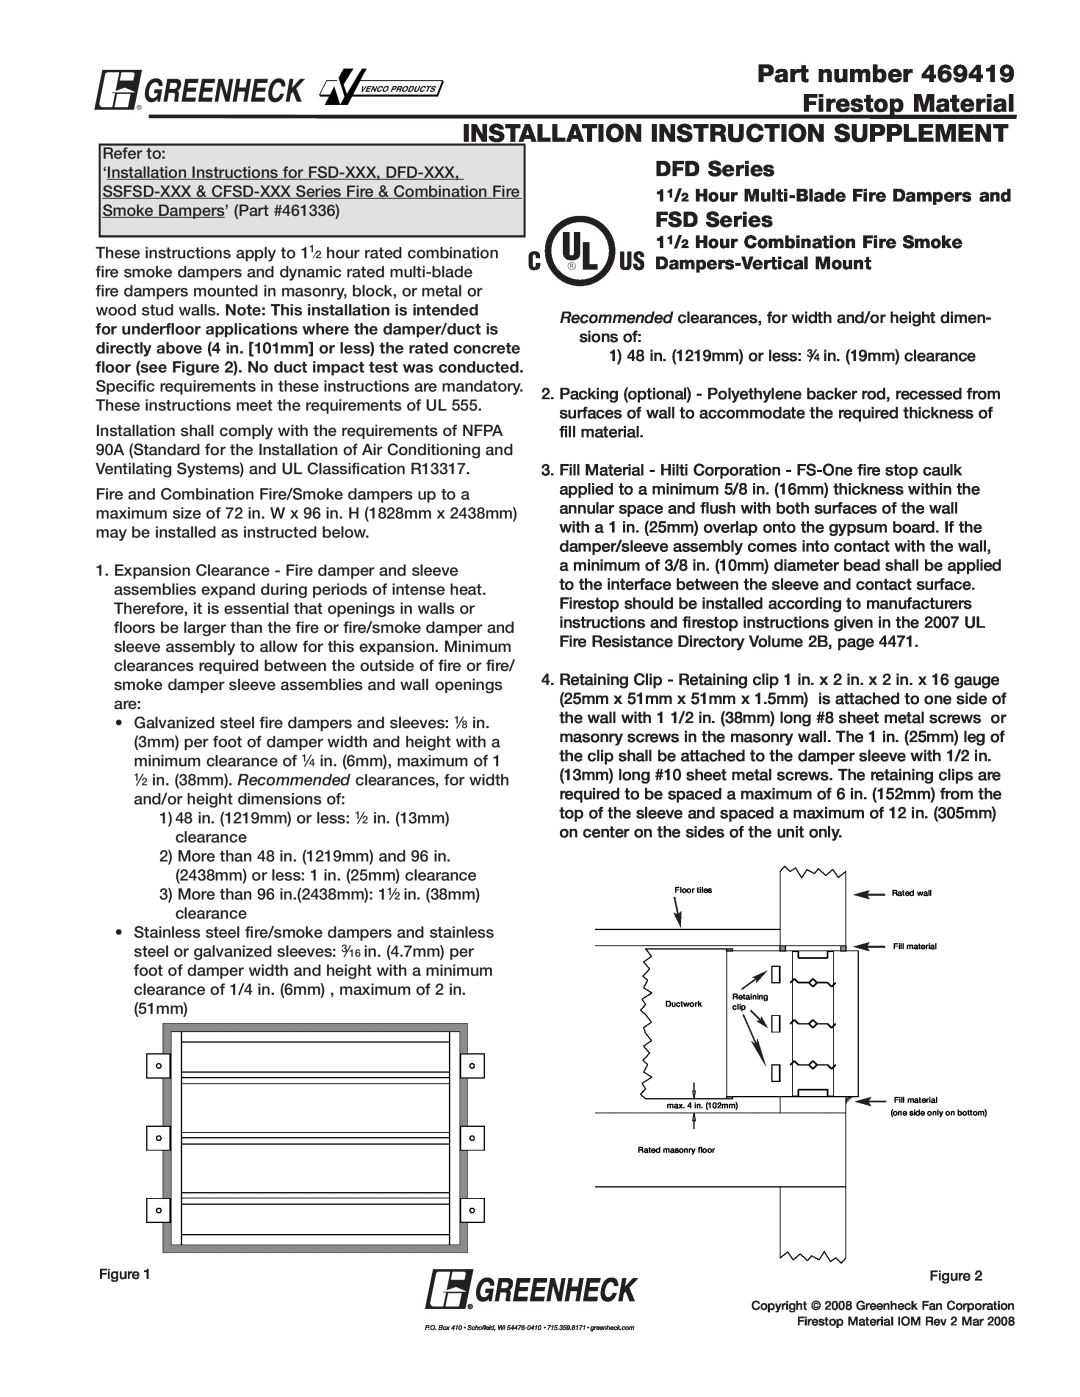 Greenheck Fan DFD Series installation instructions Part number, Firestop Material, Installation Instruction Supplement 